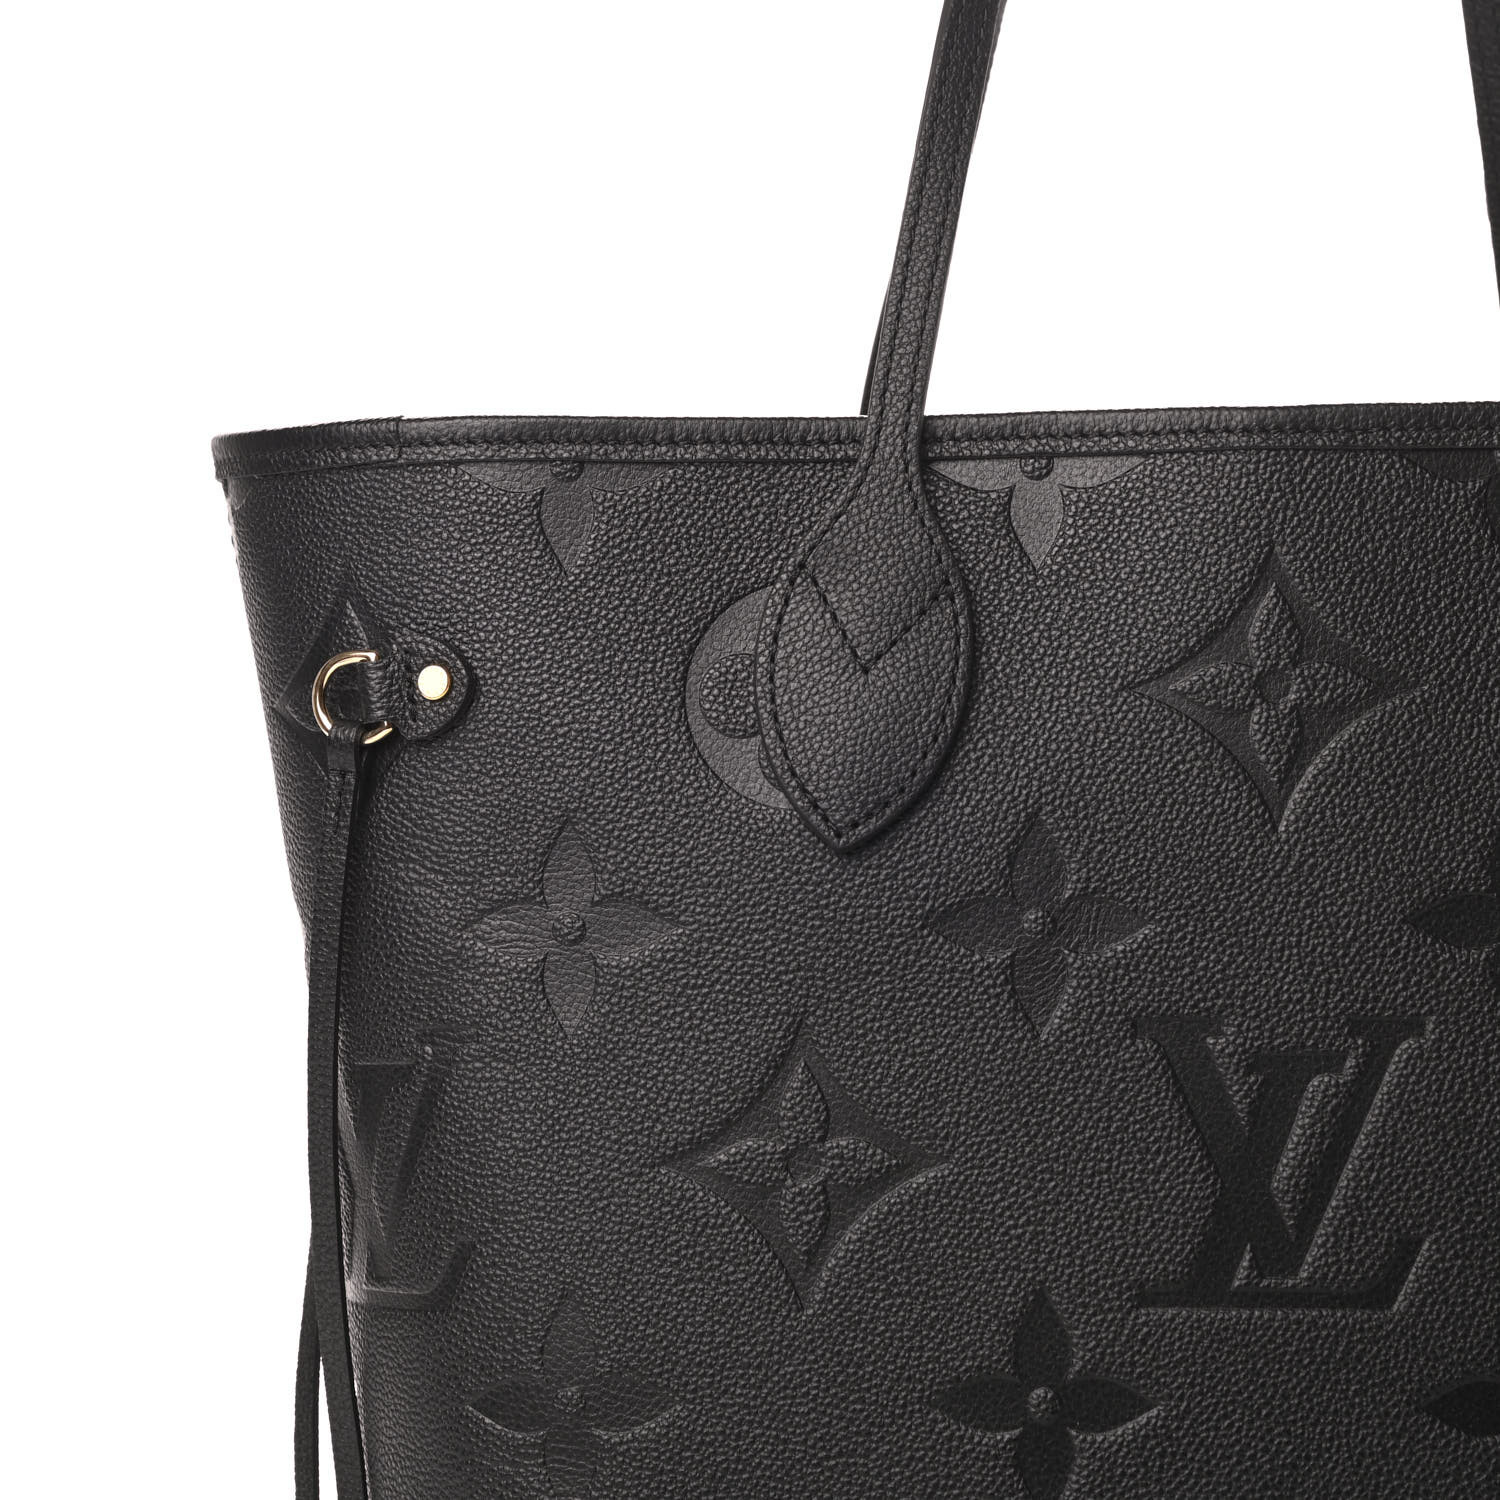 Introducing the Louis Vuitton Neo Alma in Monogram Empreinte - PurseBlog